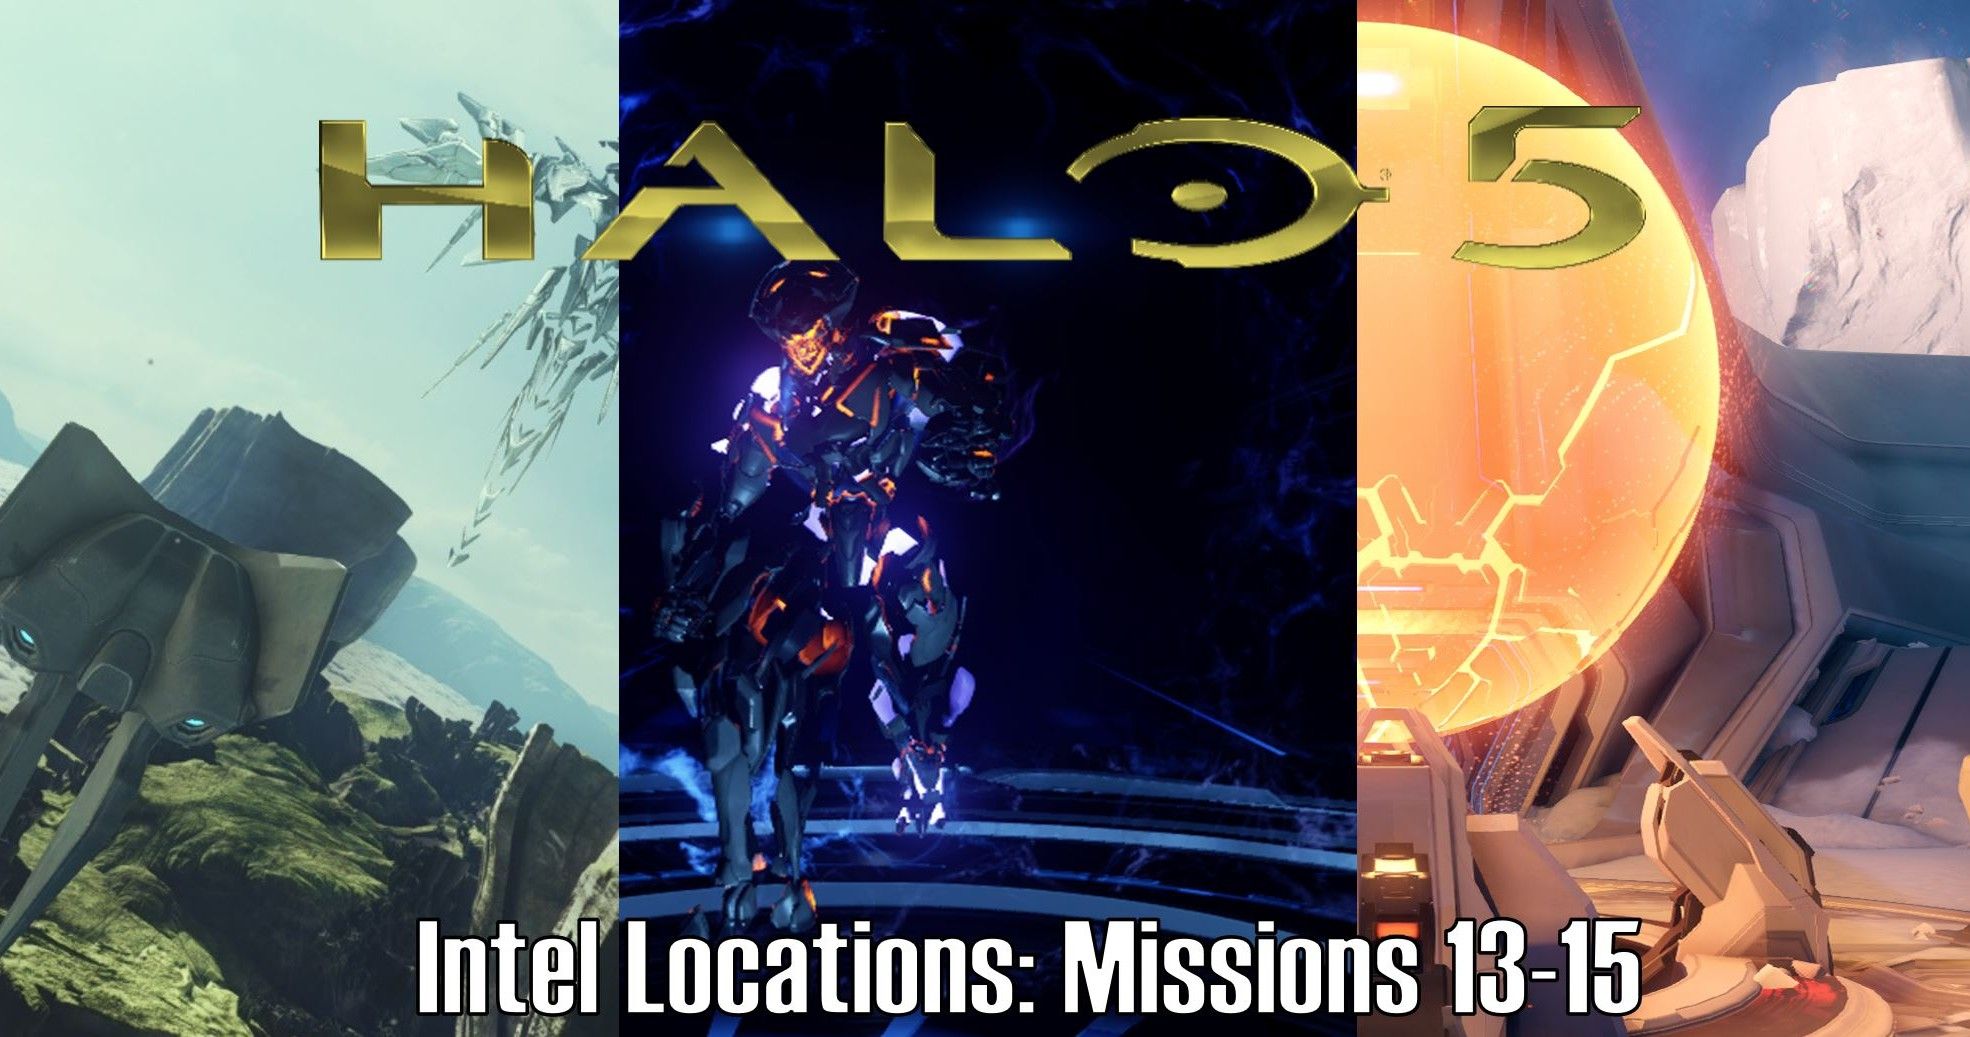 Halo 5 Intel Locations Missions 13-15